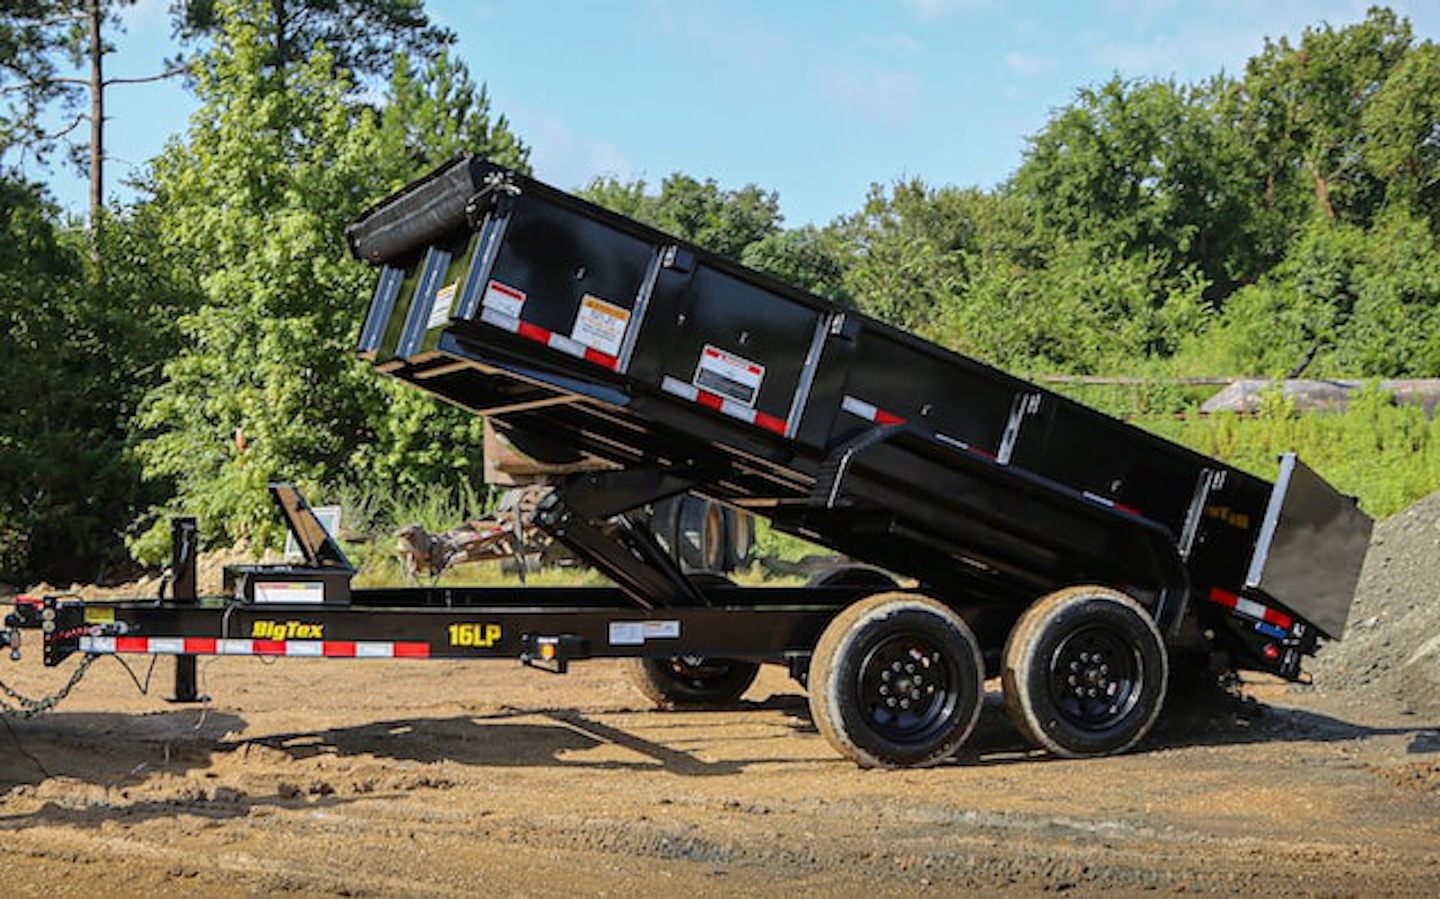 Big Tex's introduces new 16LP ultra low profile dump trailer | Trucks ...